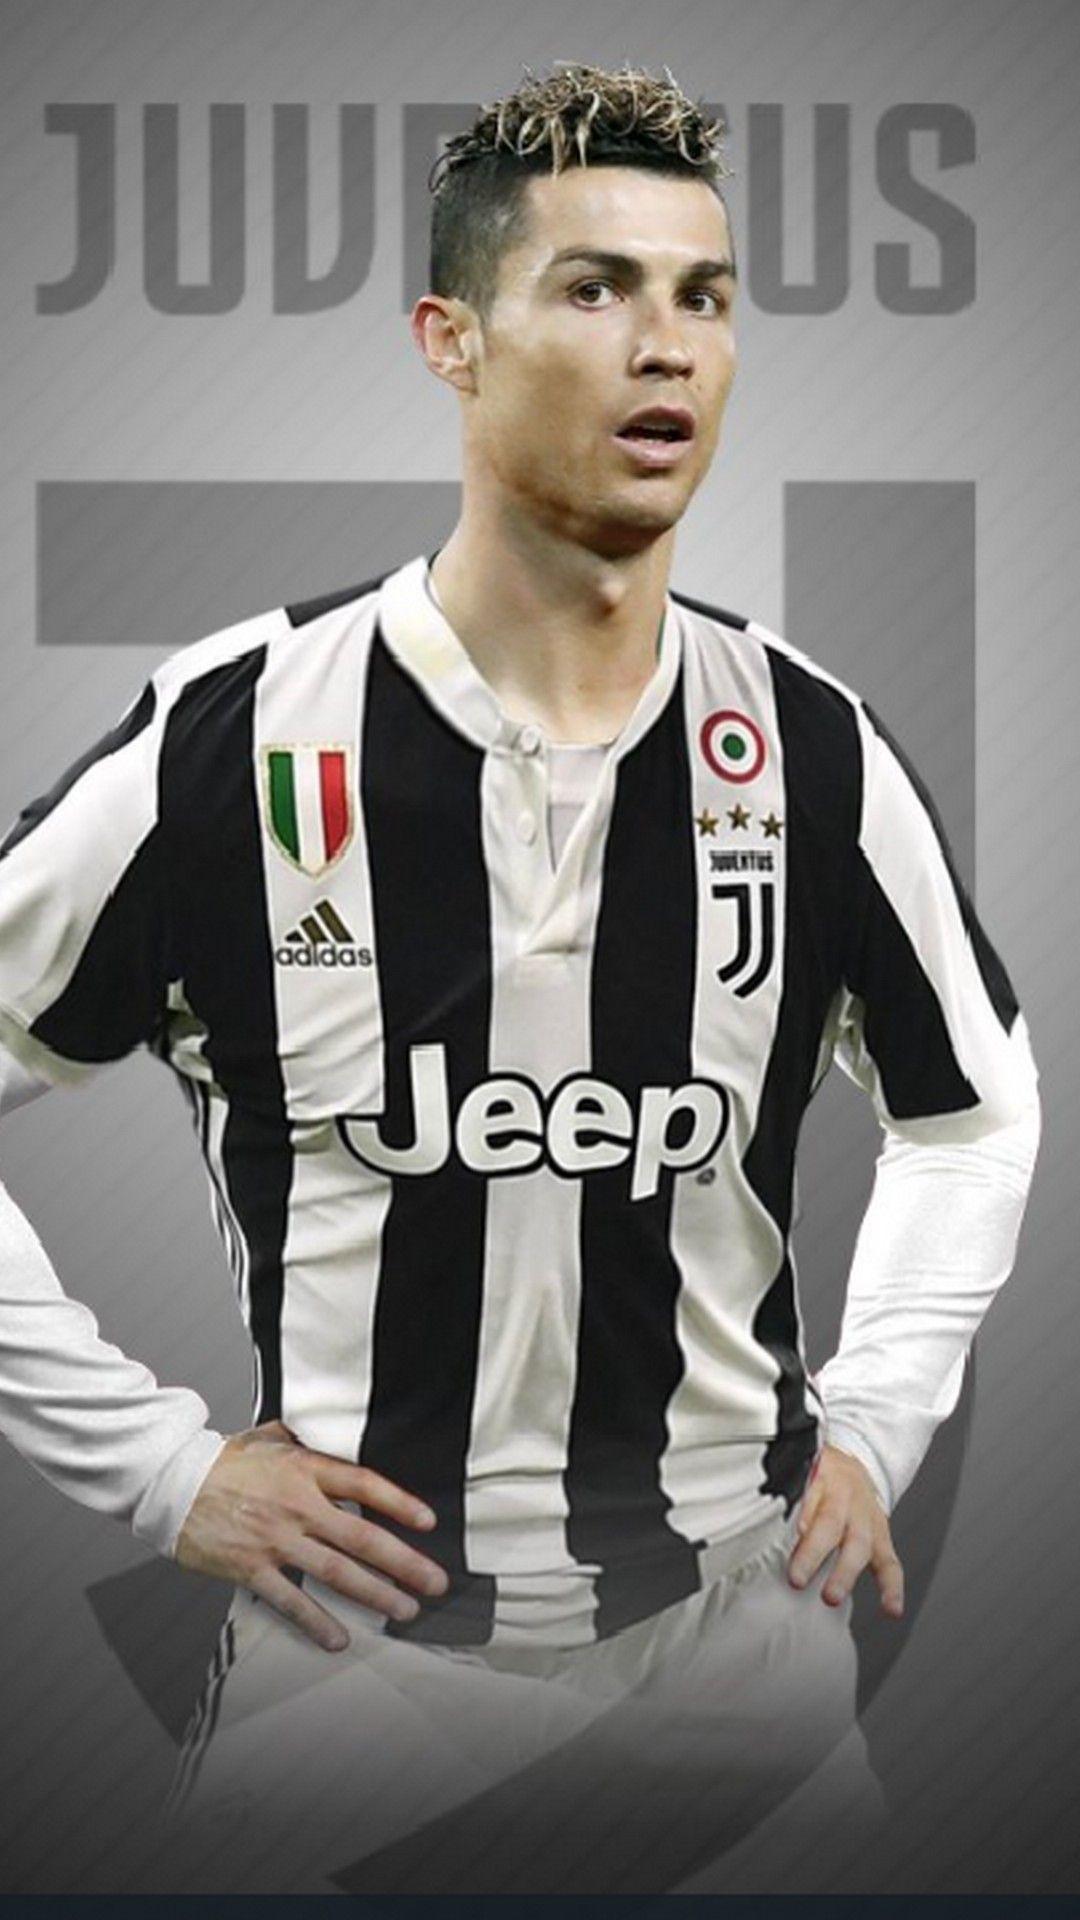 Wallpaper Cristiano Ronaldo Juventus Android Mobile